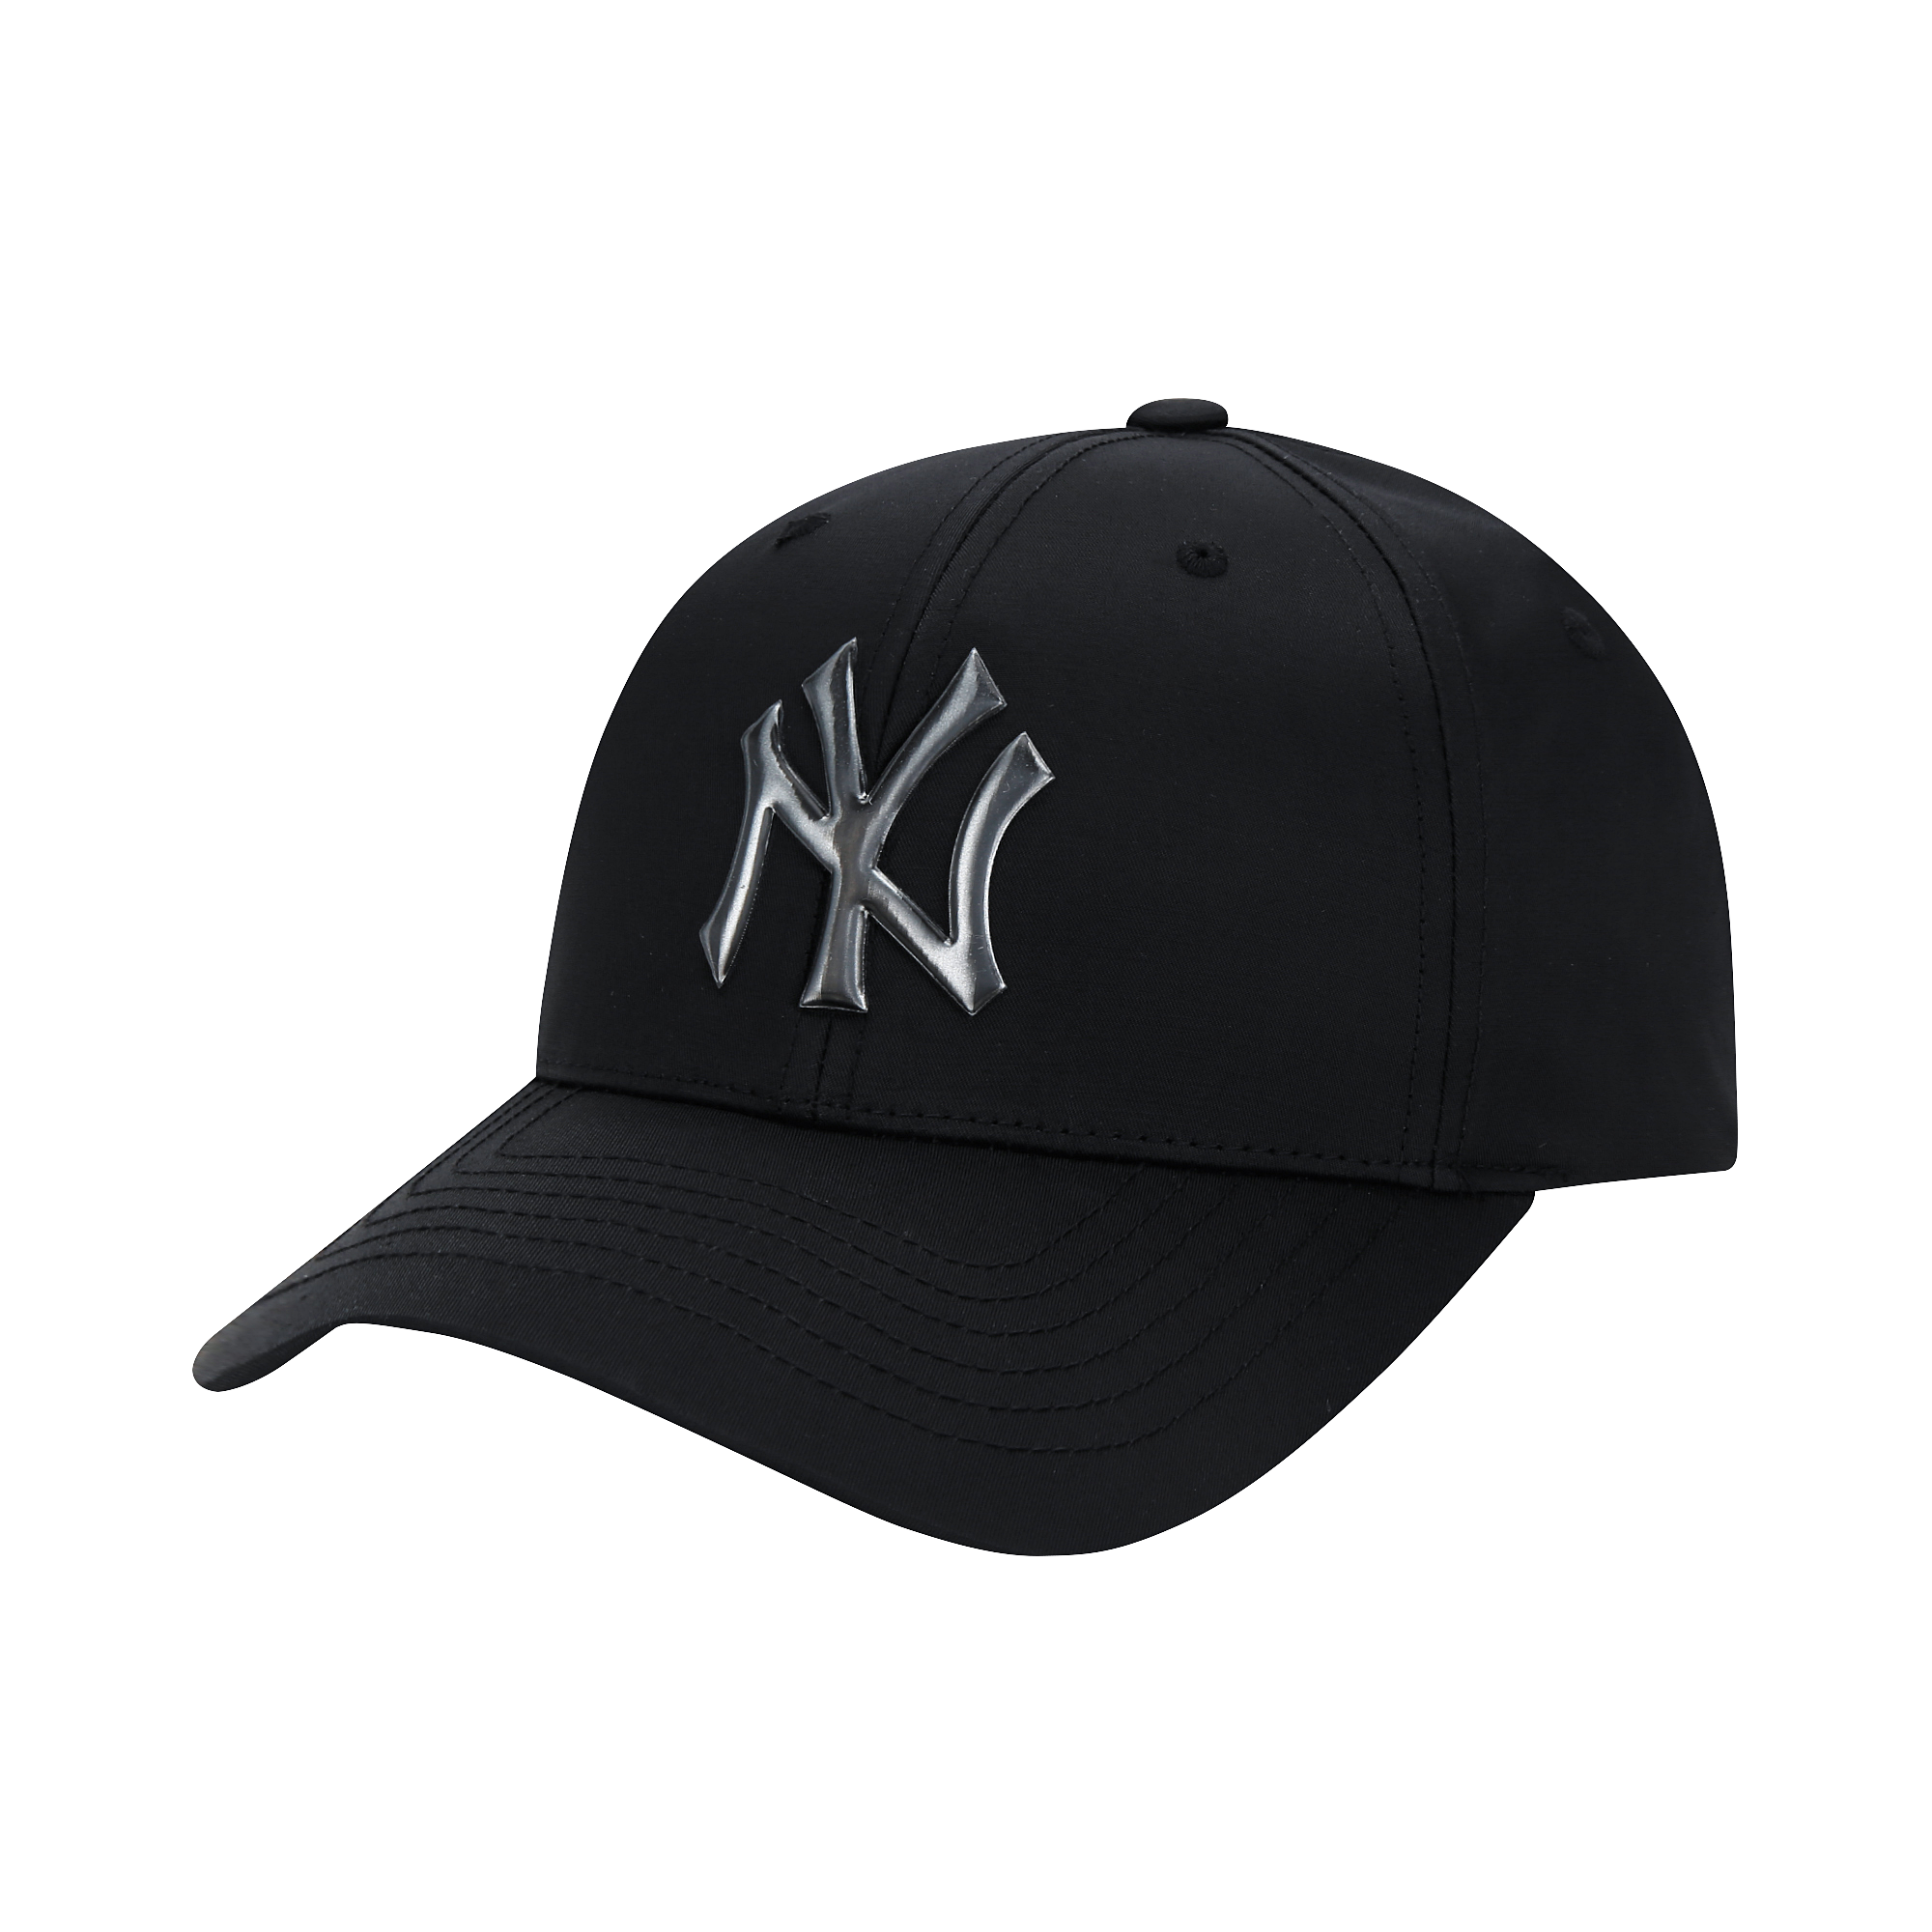 Official New York Yankees Homeware, Office Supplies.